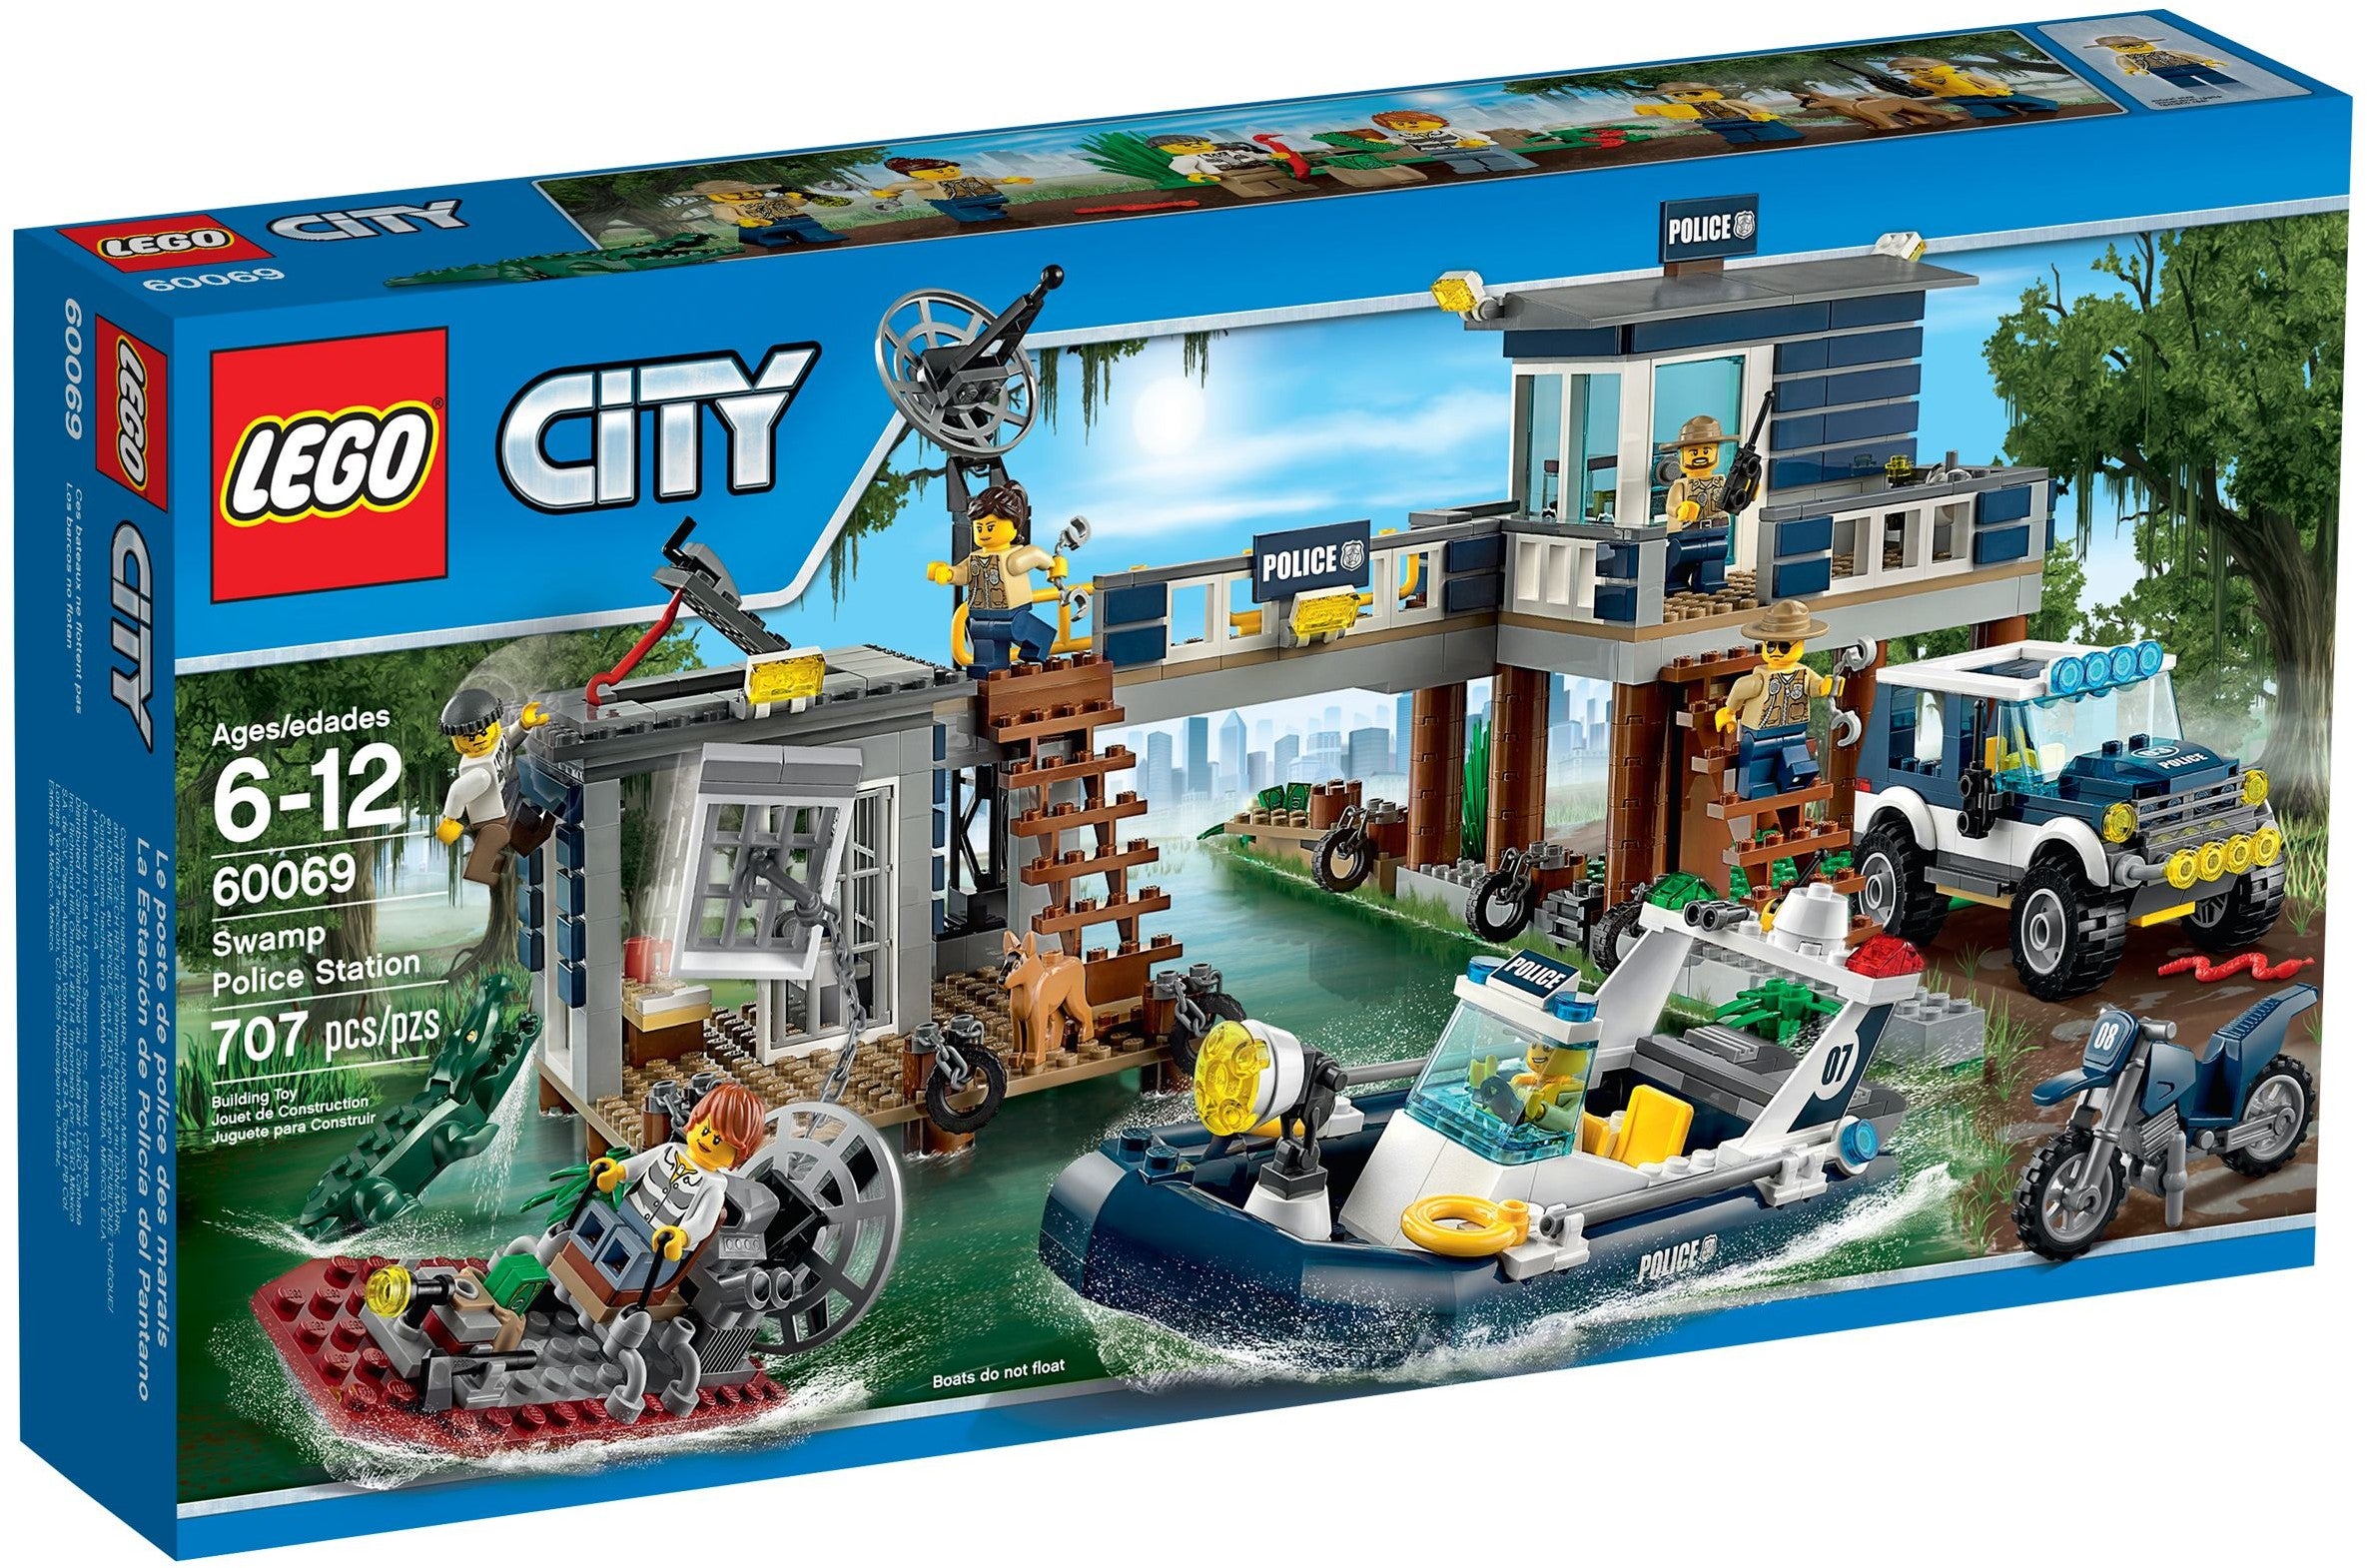 Lego City 60069 - Swamp Police Station